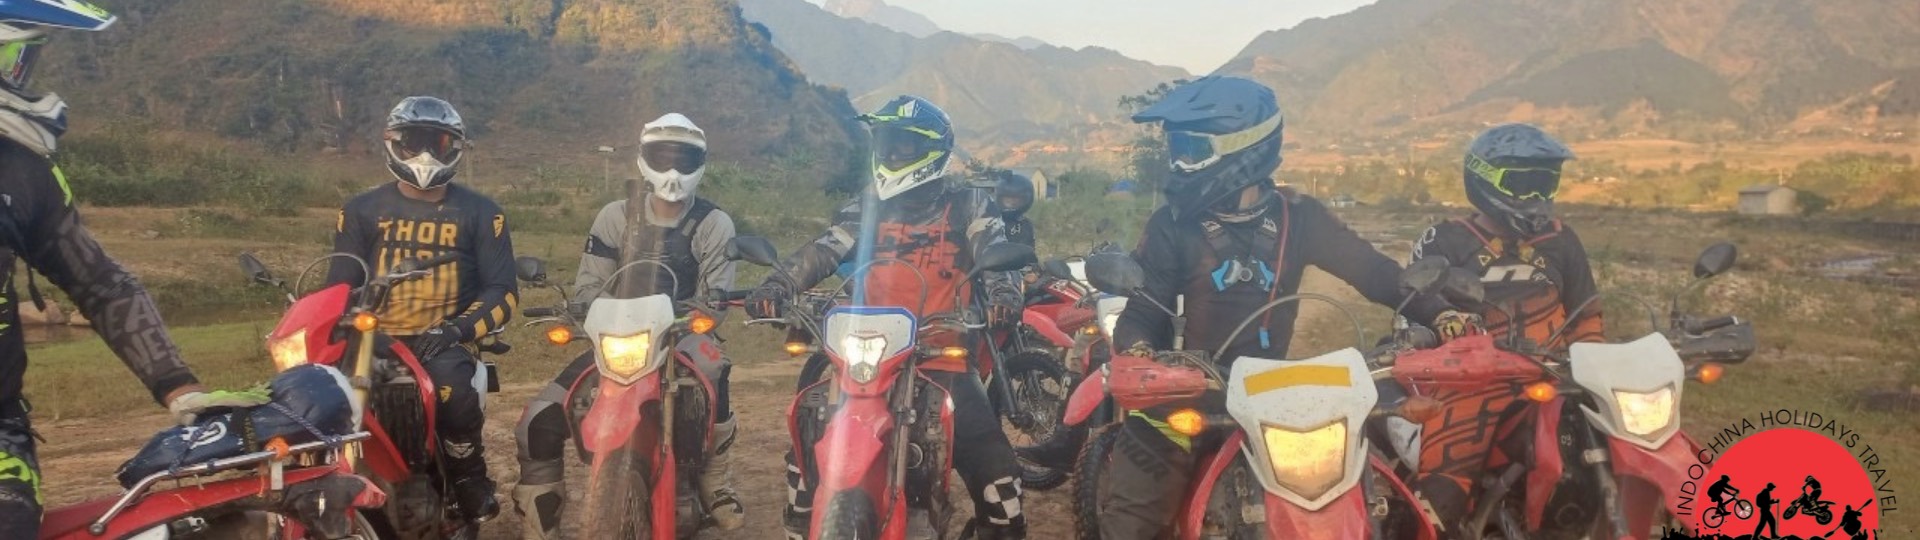 Cambodia motorbike tours